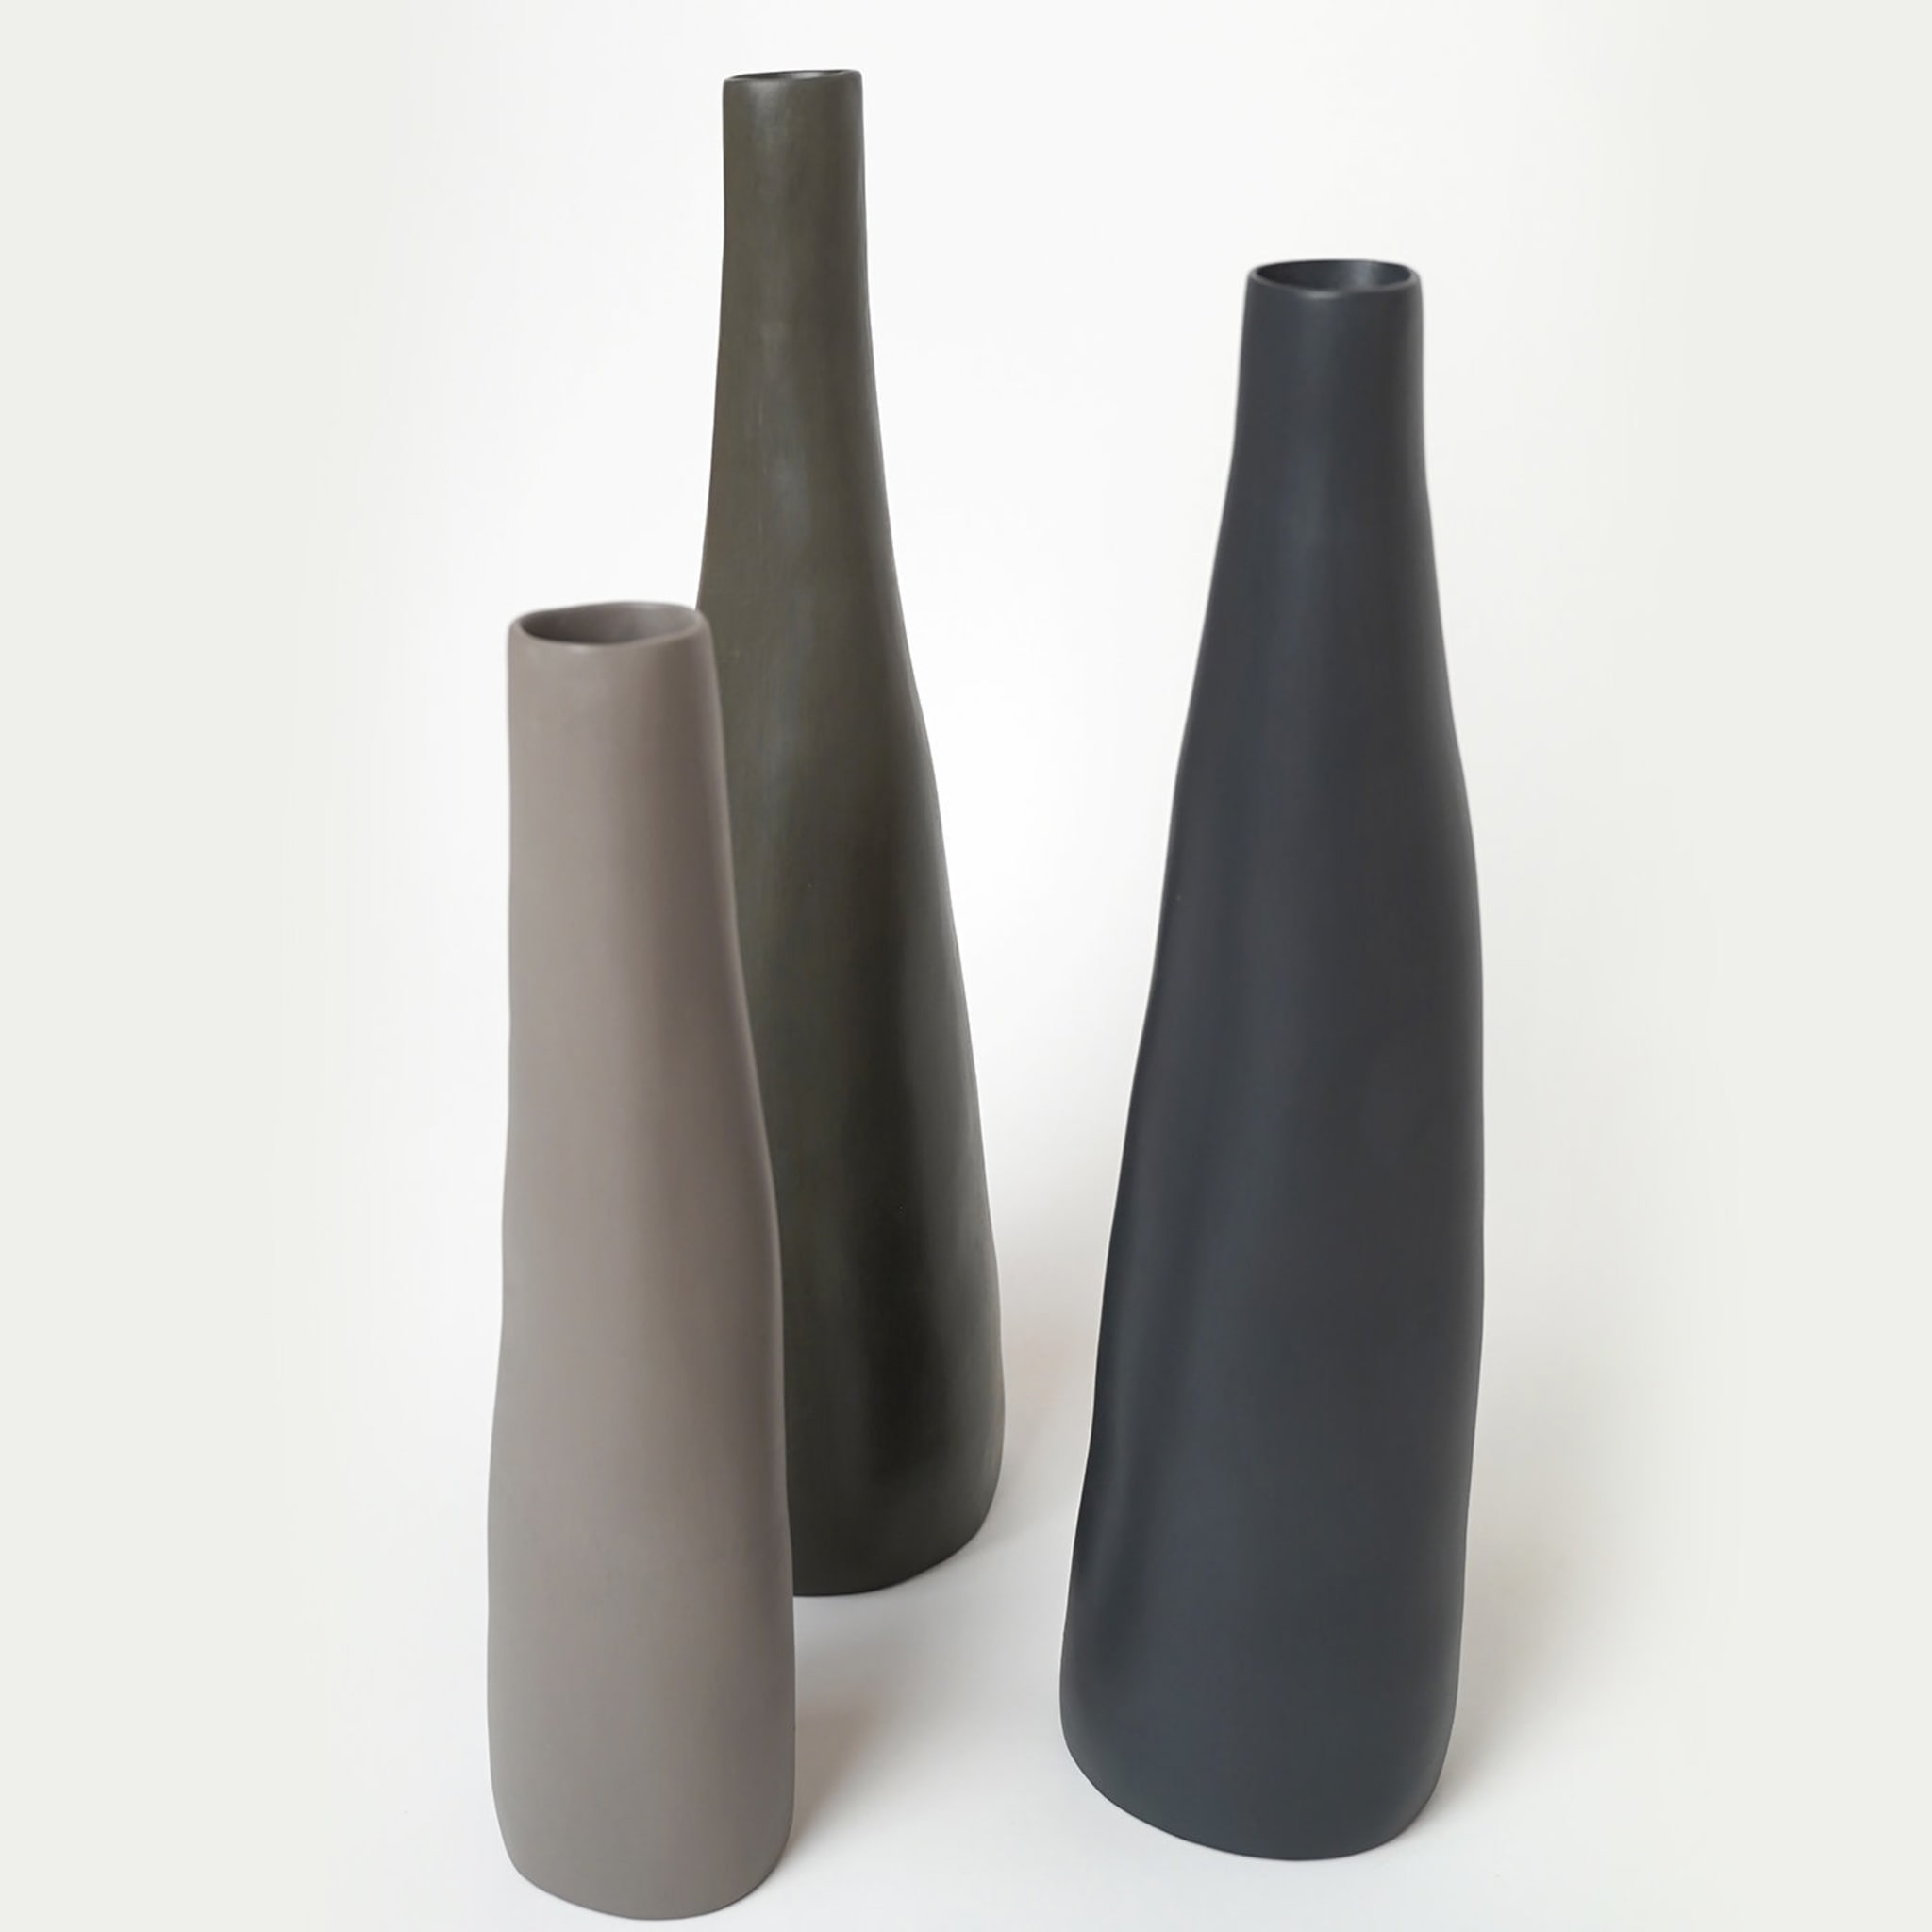 Onda Set of 3 Tall Vases - Alternative view 1